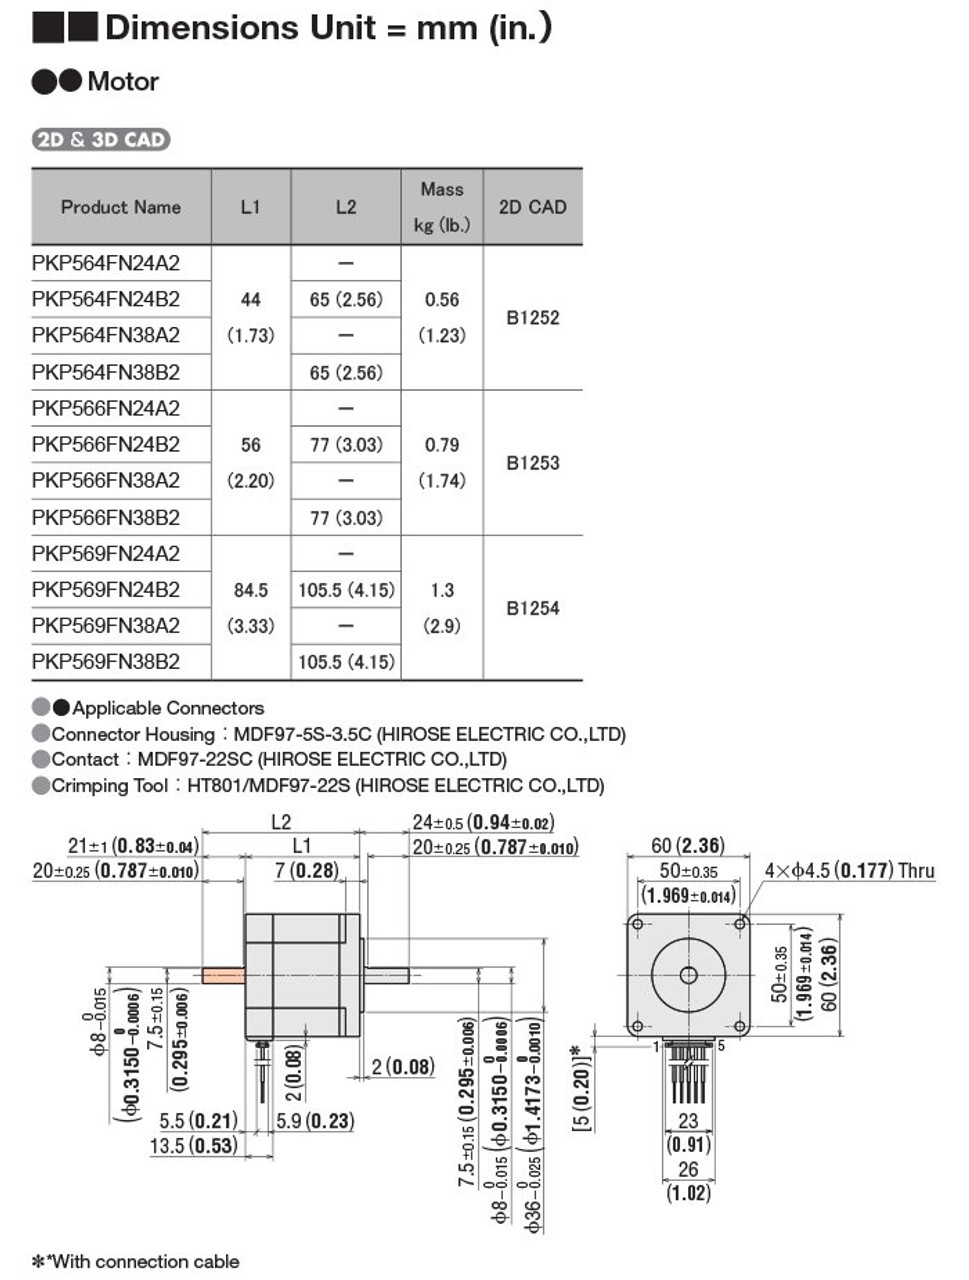 PKP566FN38A2 - Dimensions